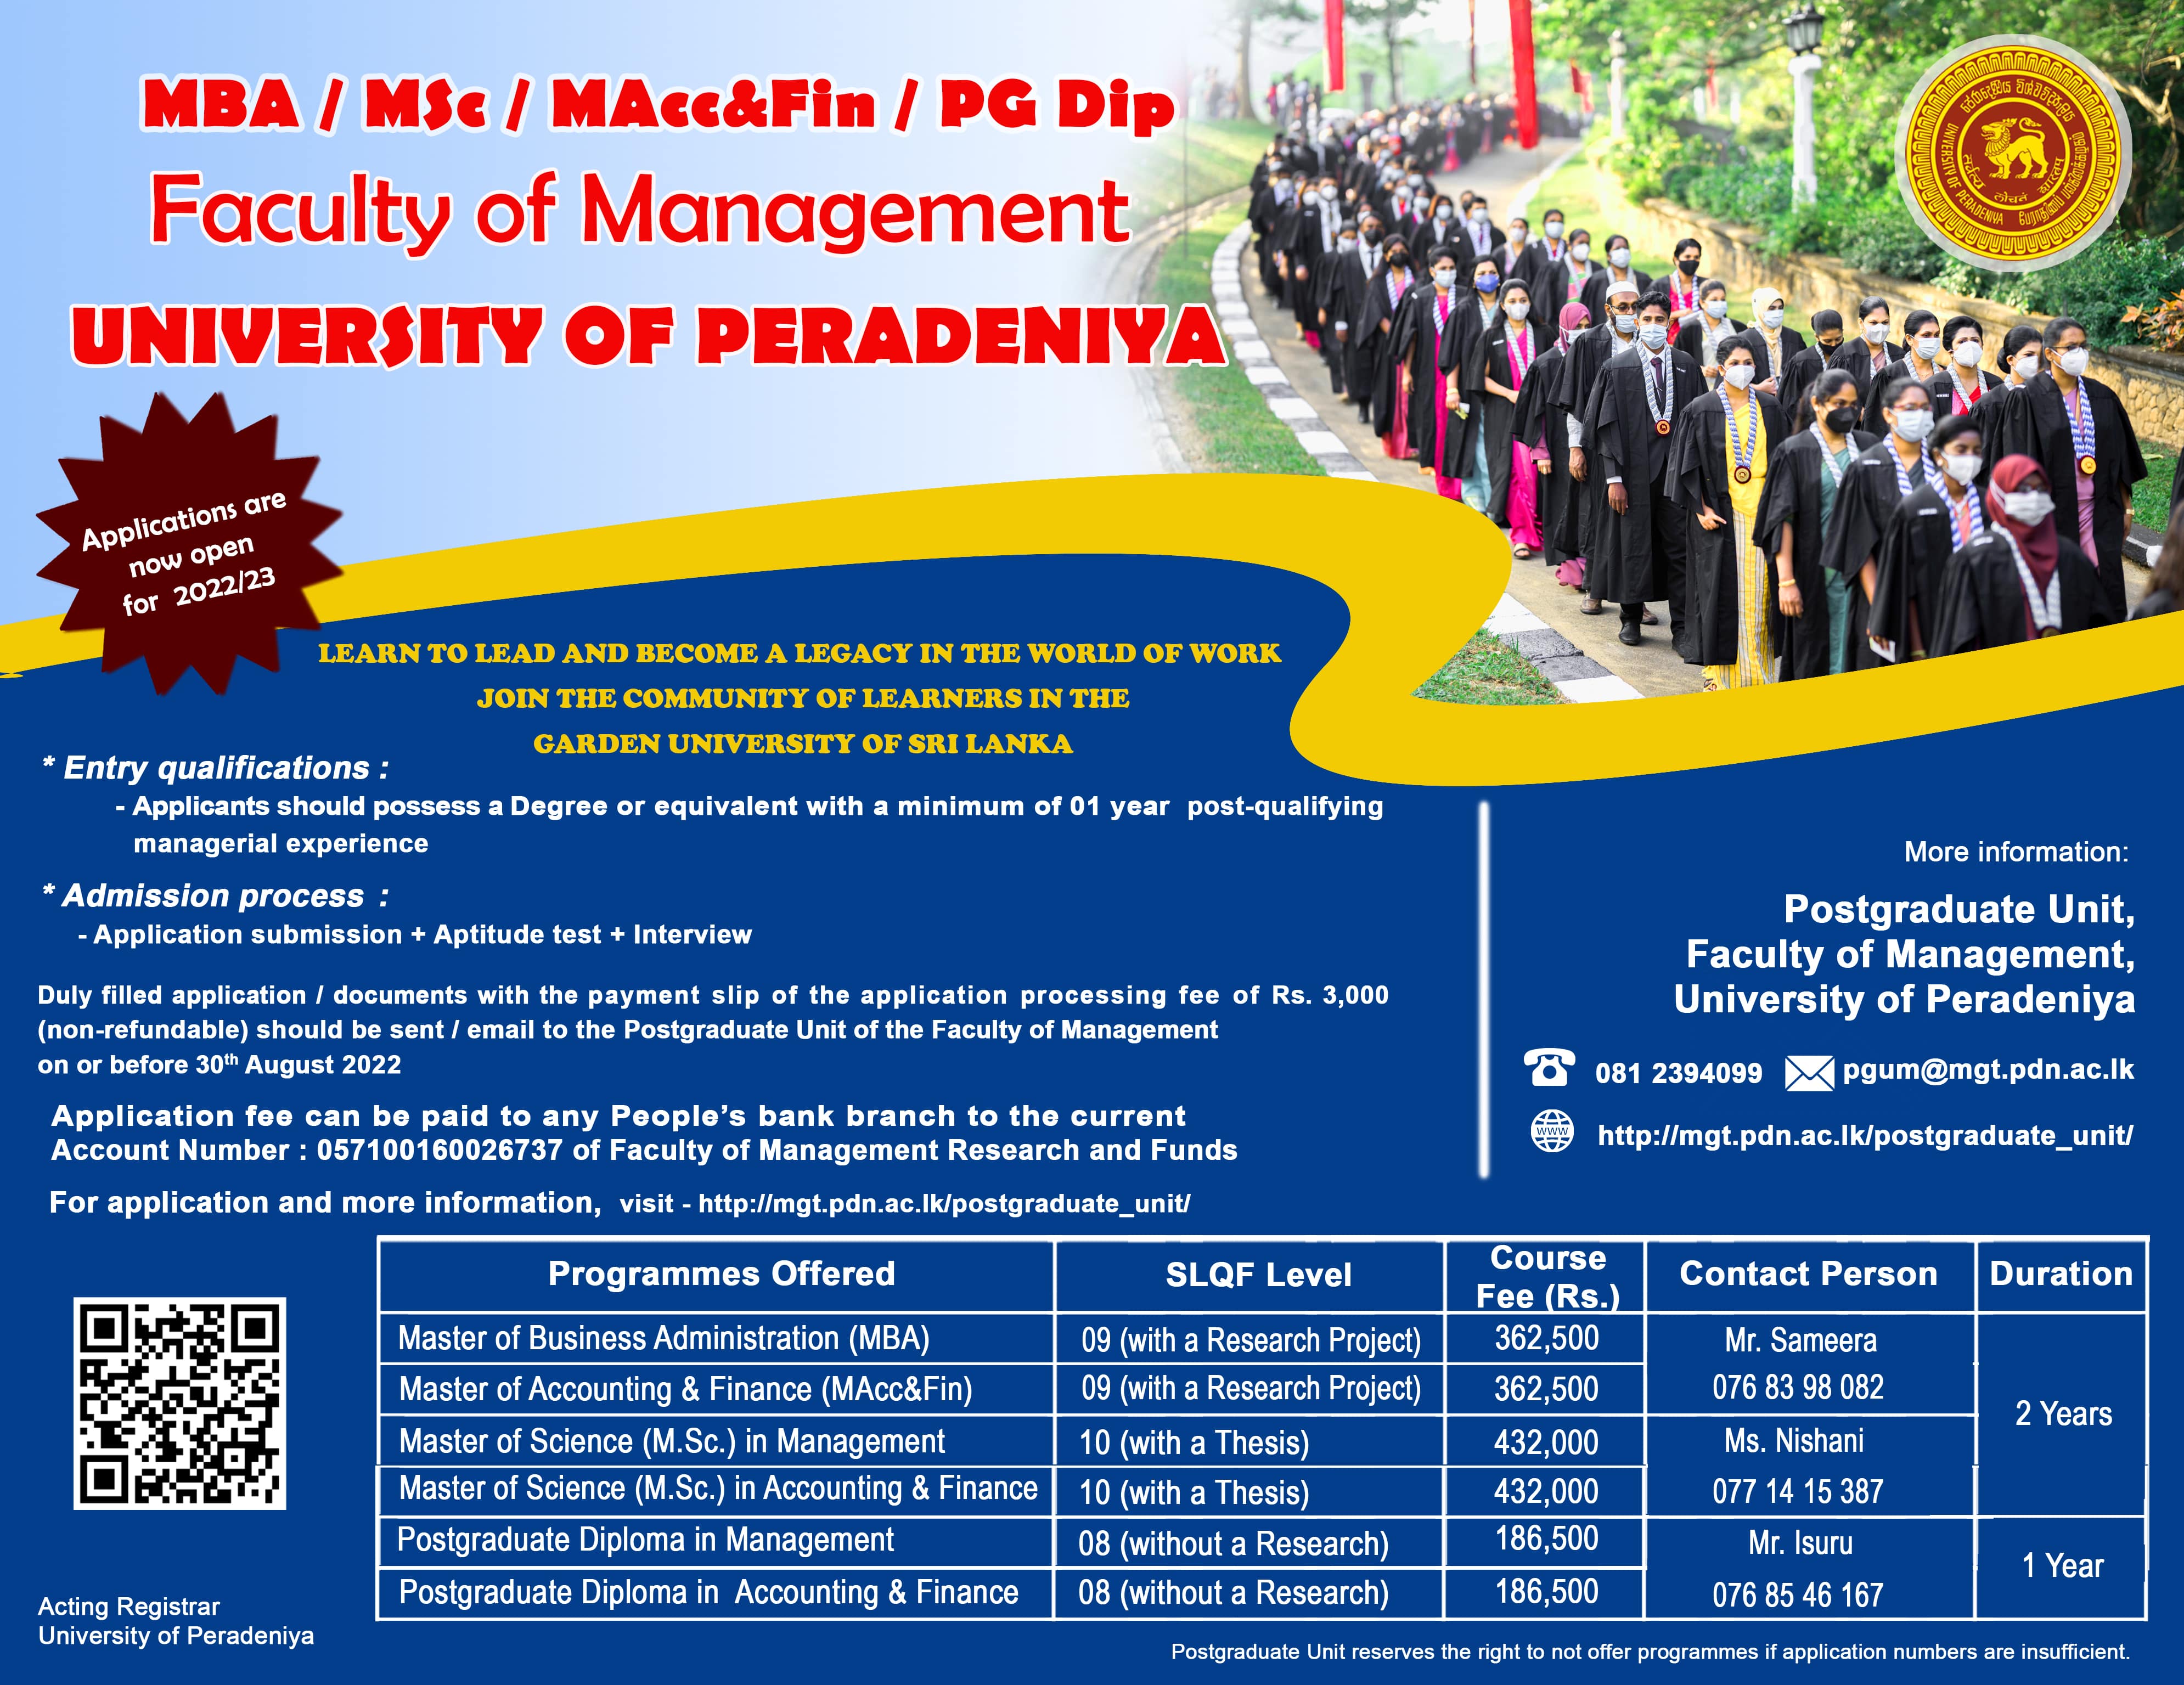 Faculty of management Postgraduate Programme 2022/2023 - University of Peradeniya